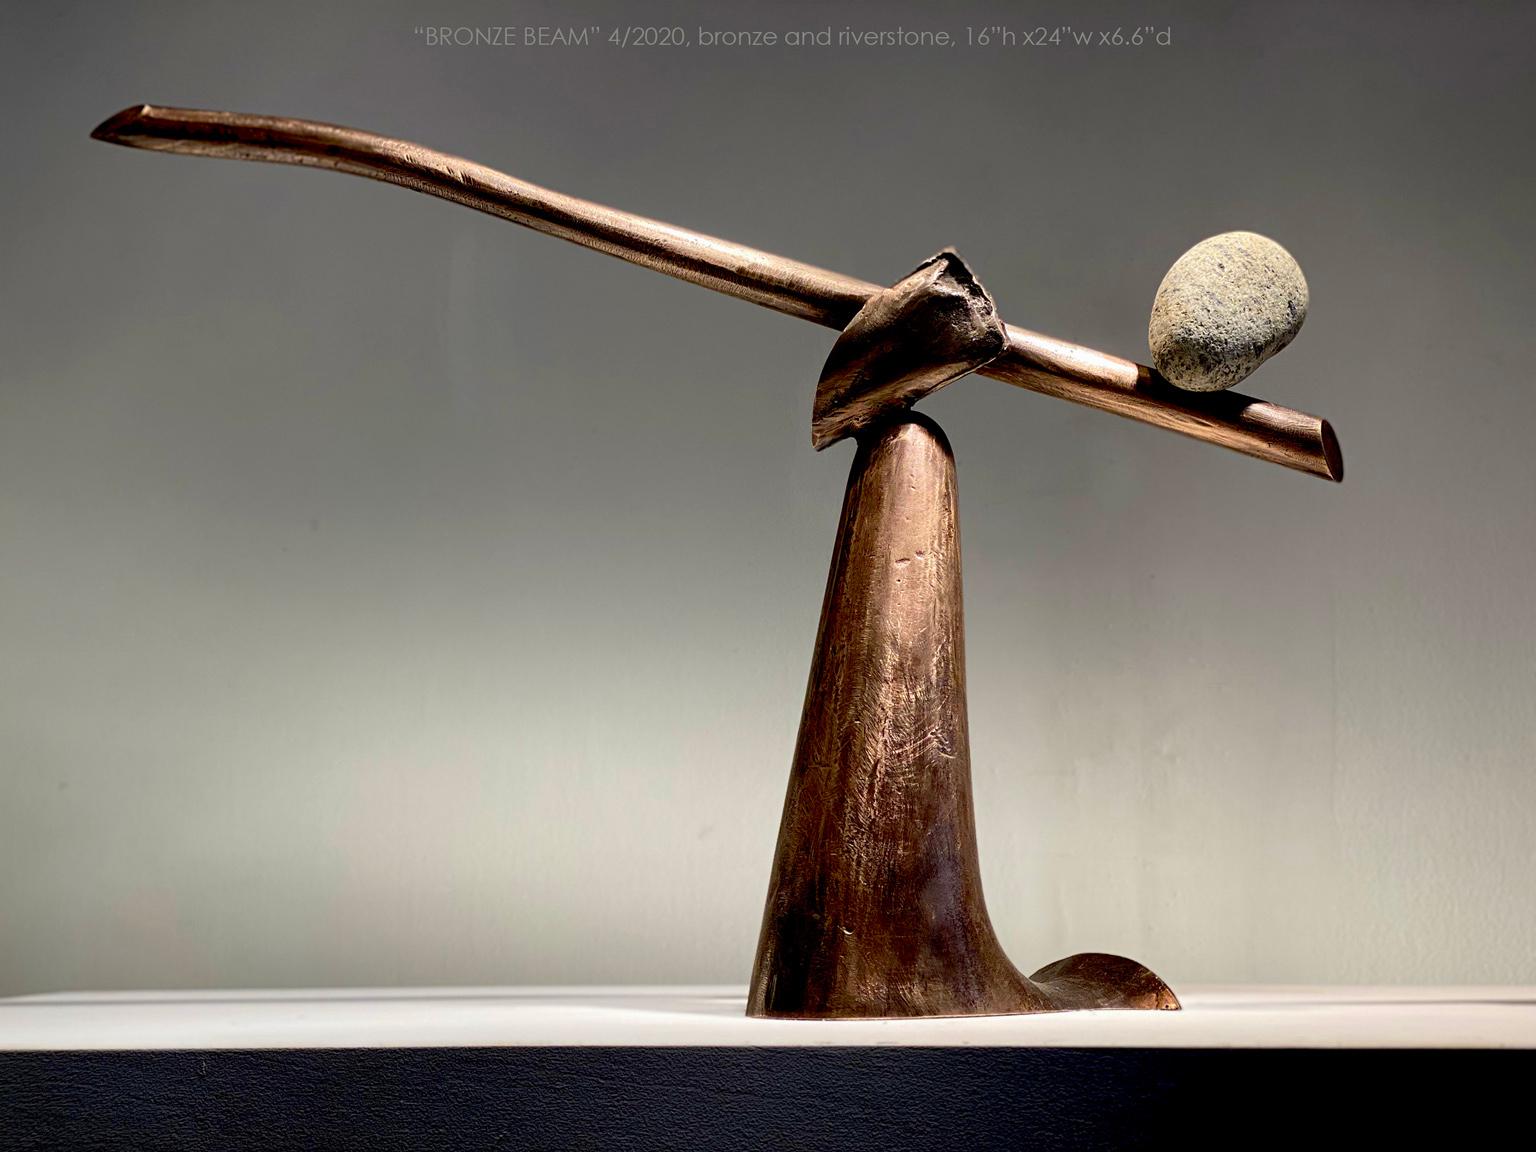 Abstract Sculpture John Van Alstine - "BRONZE BEAM", Sculpture abstraite industrielle en métal et pierre